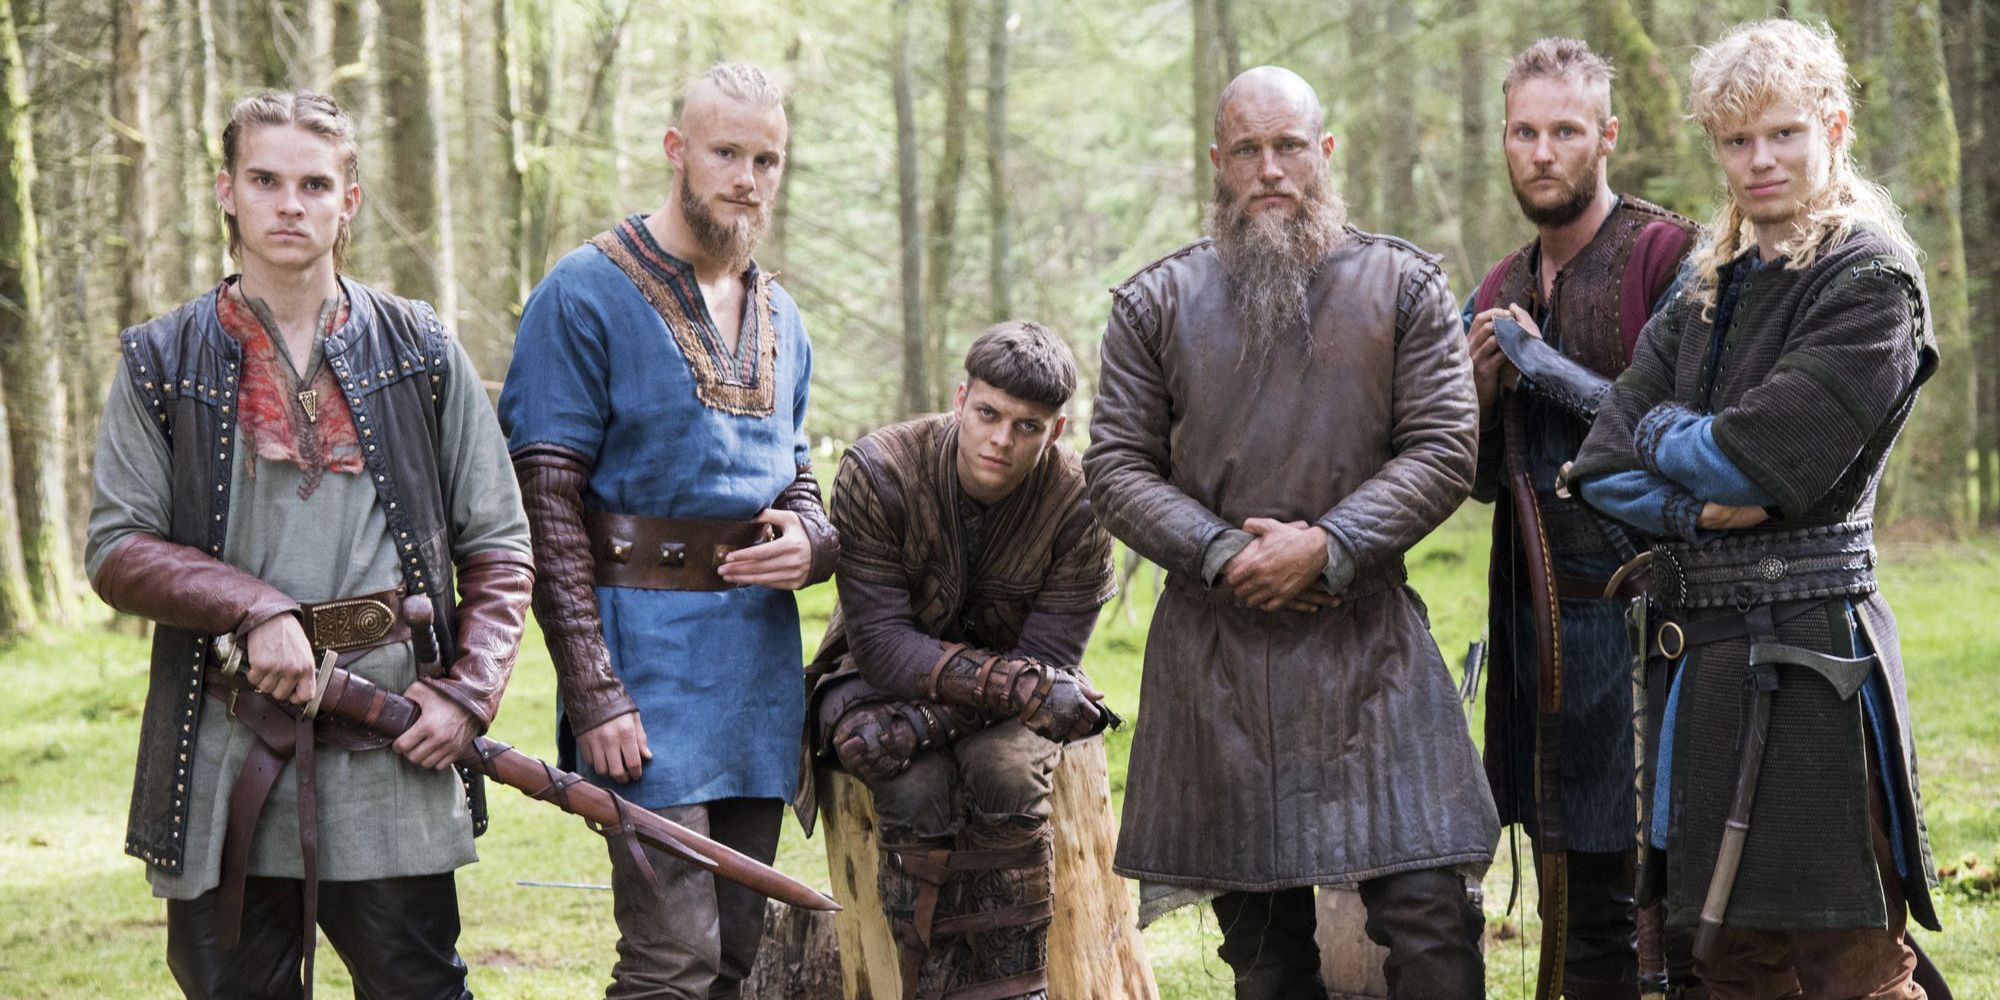 Viking Warriors: A Brief History of Ragnar Lothbrok, Björn